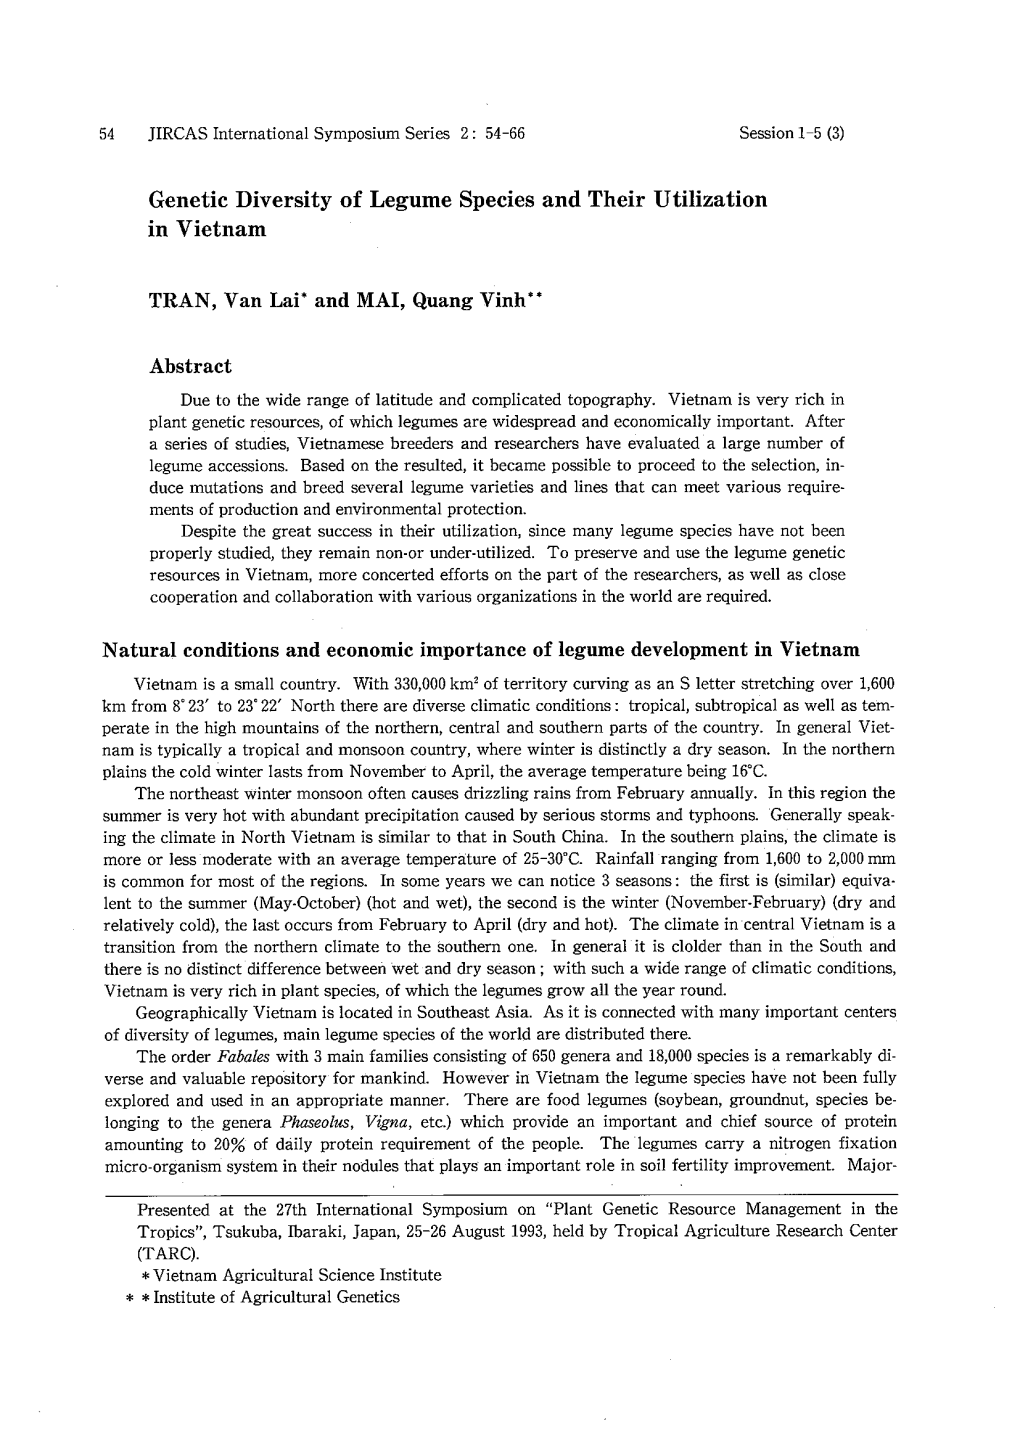 Genetic Diversity of Legume Species and Their Utilization in Vietnam